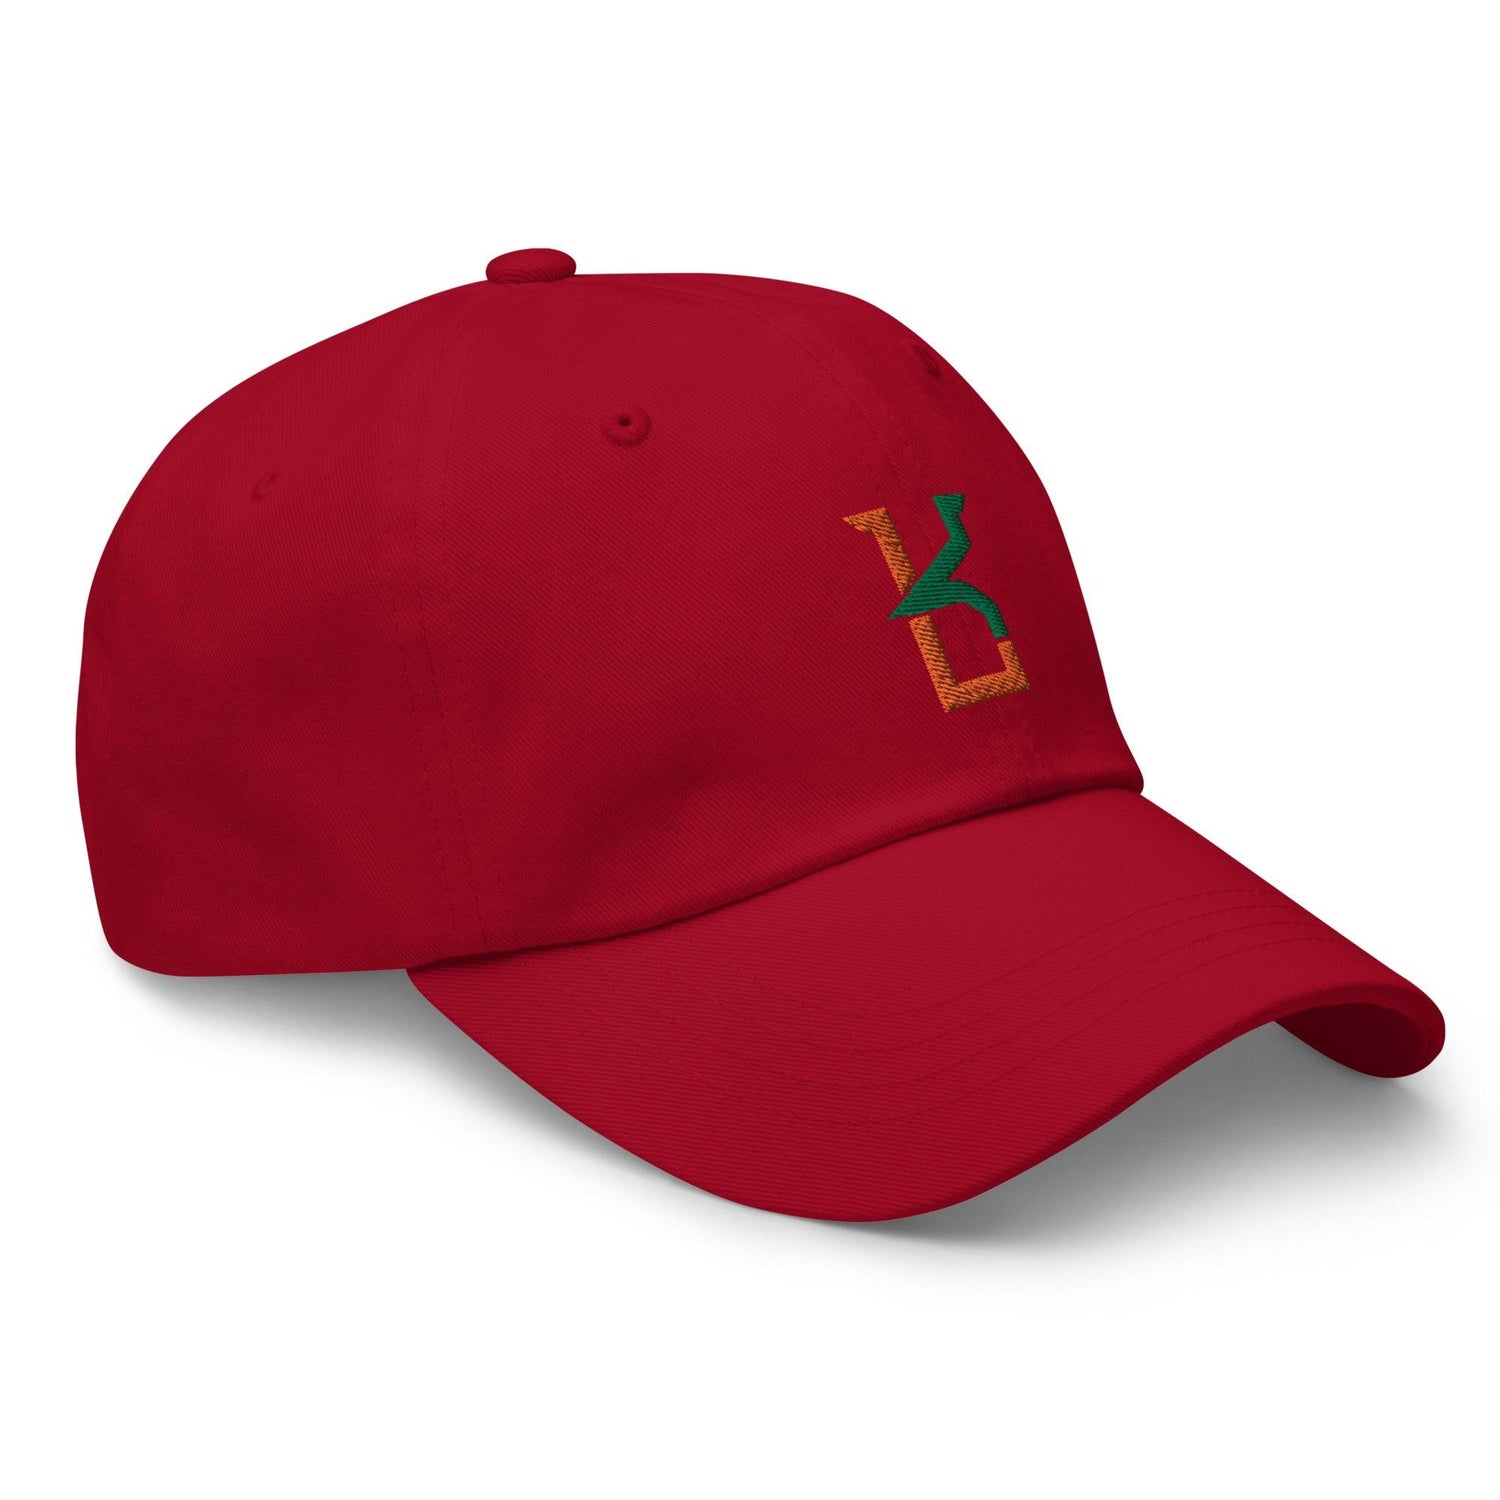 Karson Ligon "Signature" hat - Fan Arch